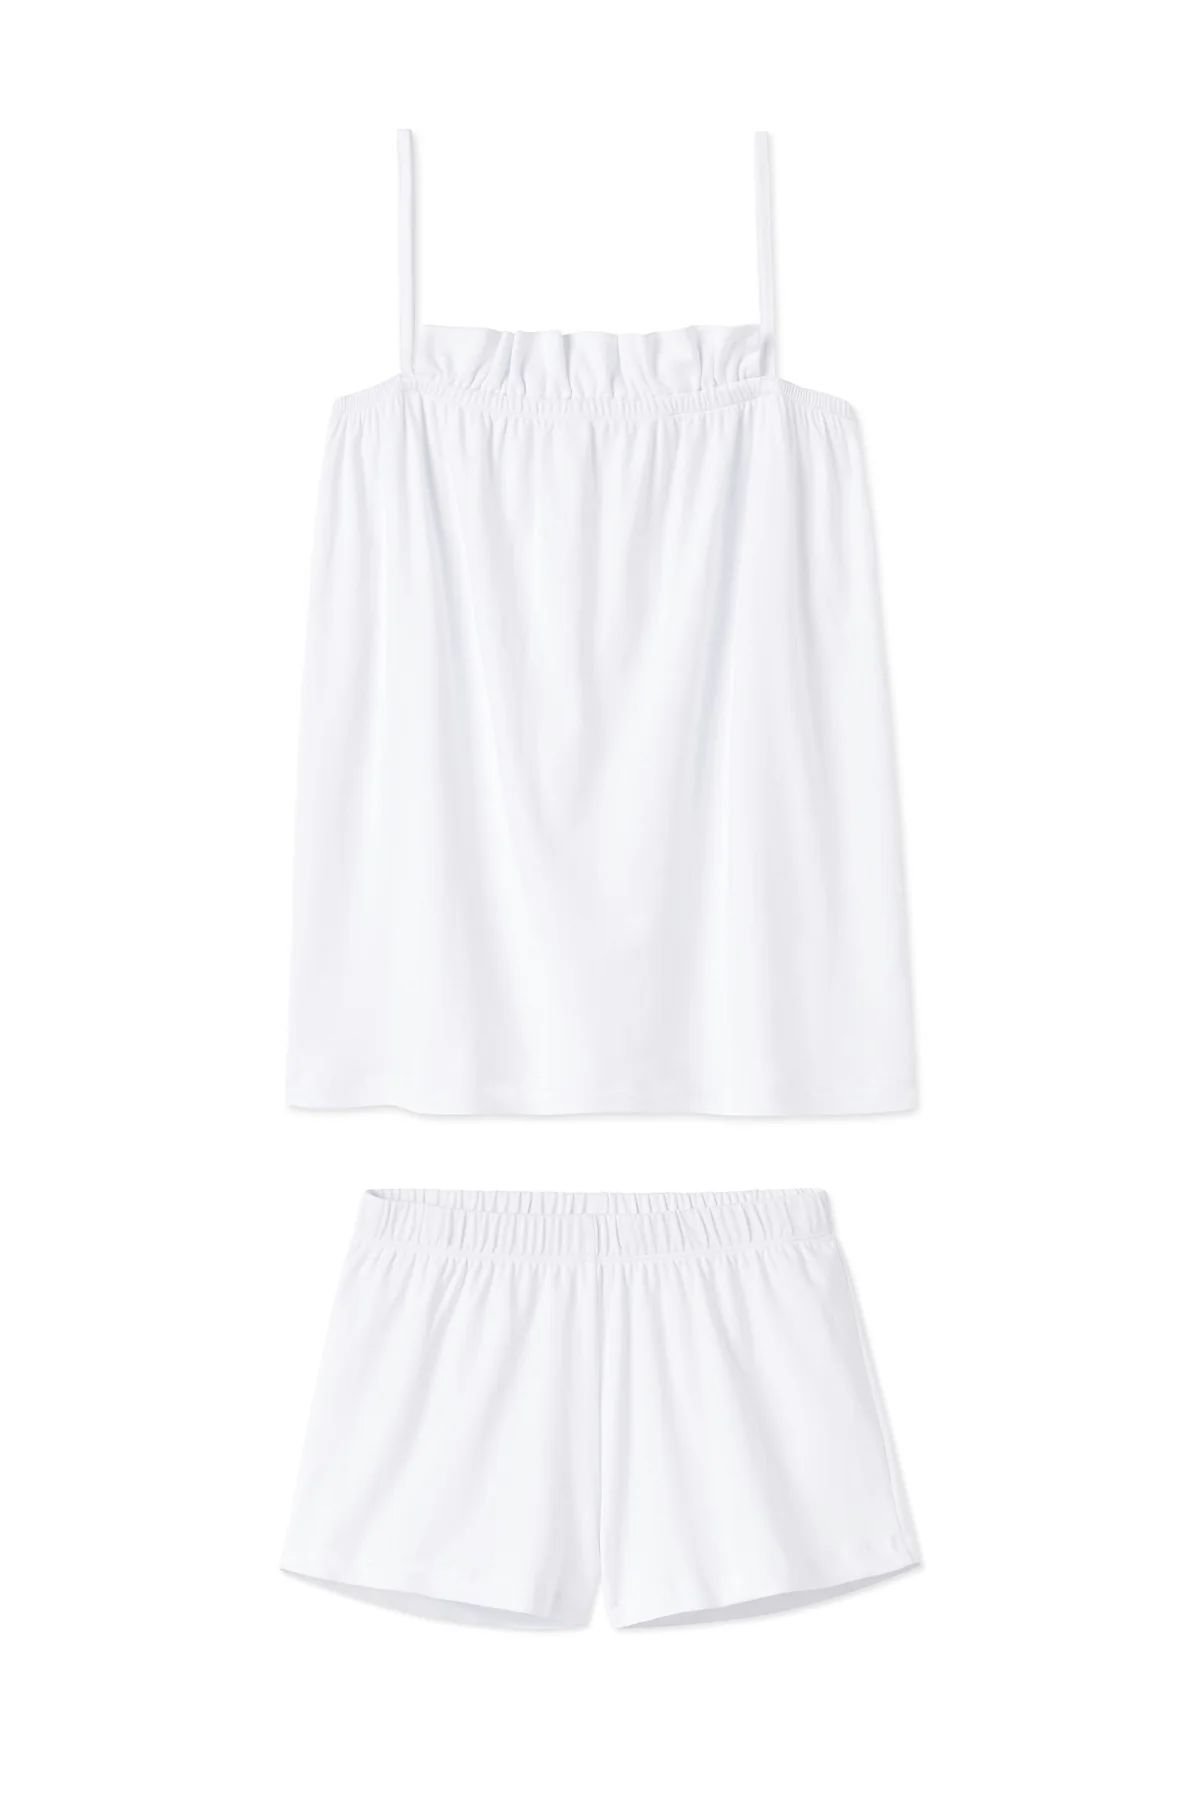 Pima Ruffle Shorts Set in White | Lake Pajamas